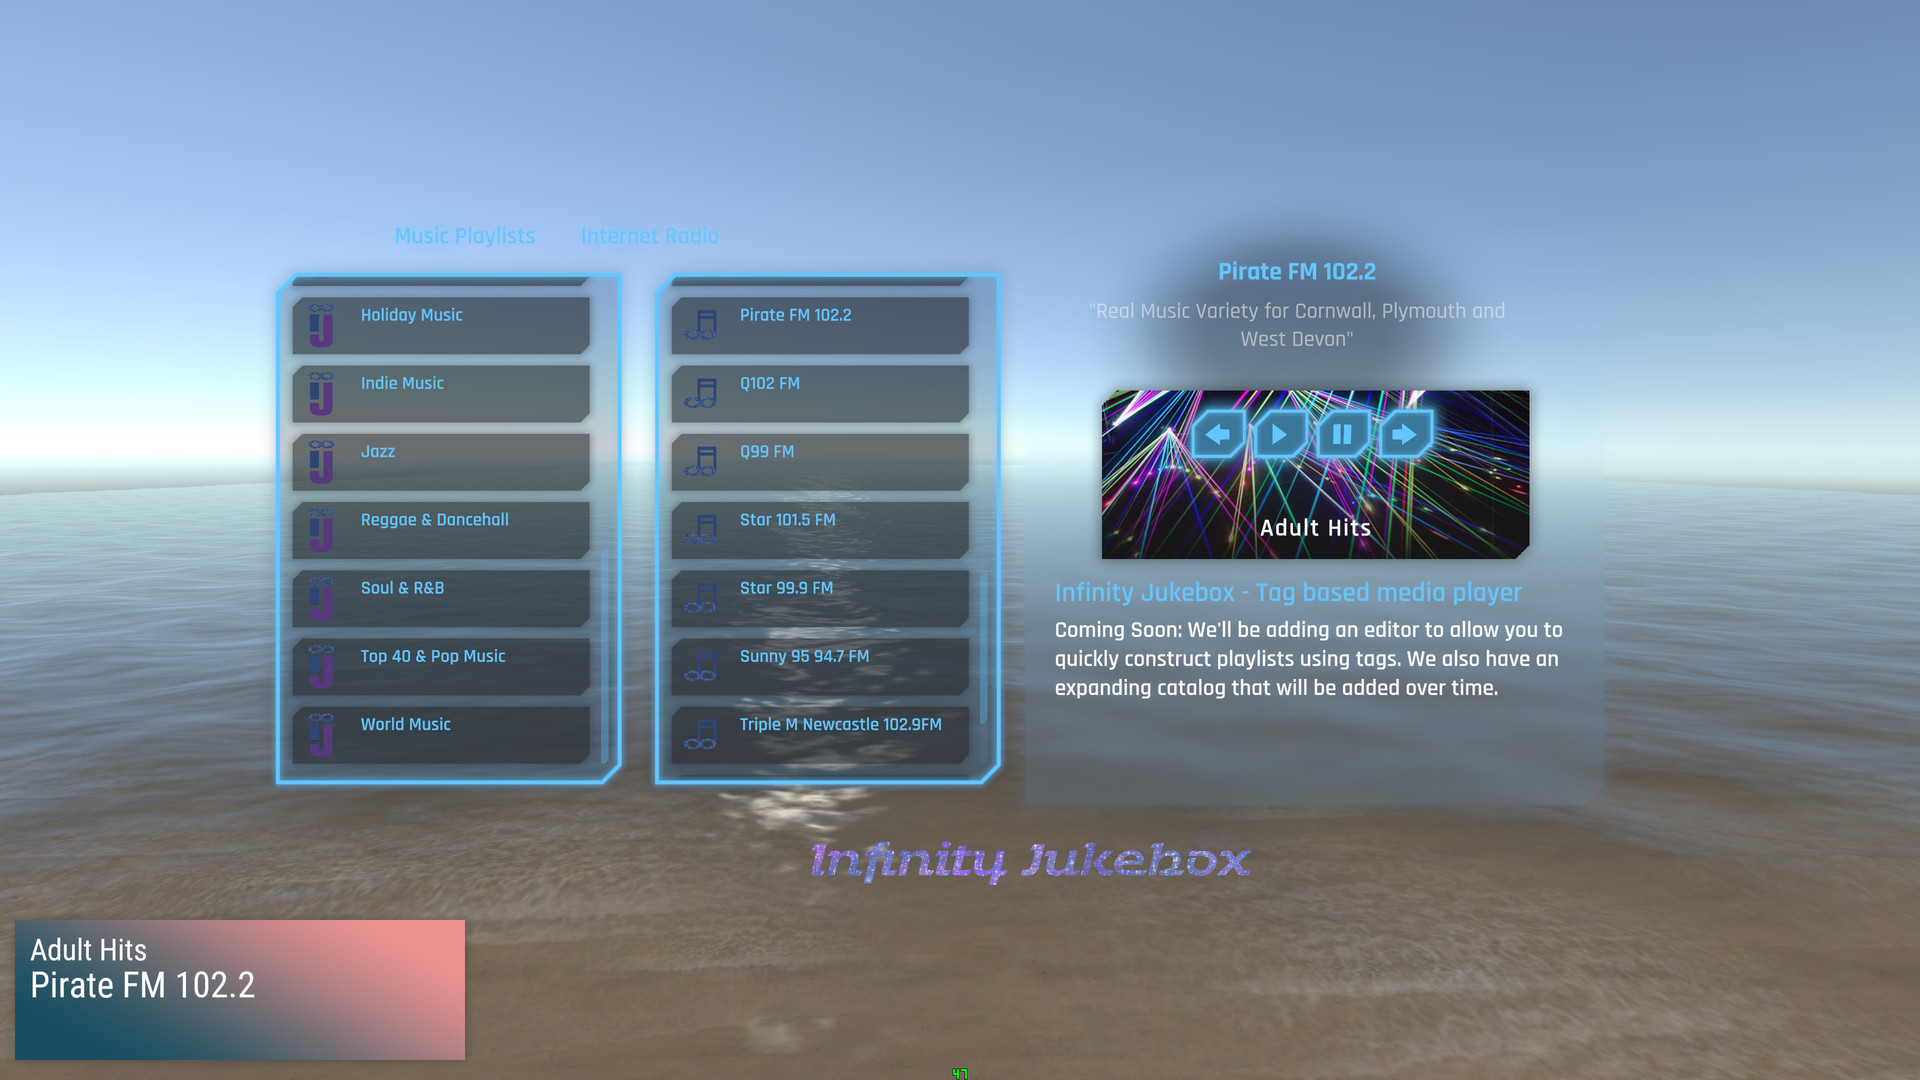 Ambient Channels: Infinity Jukebox - Internet Radio on Steam